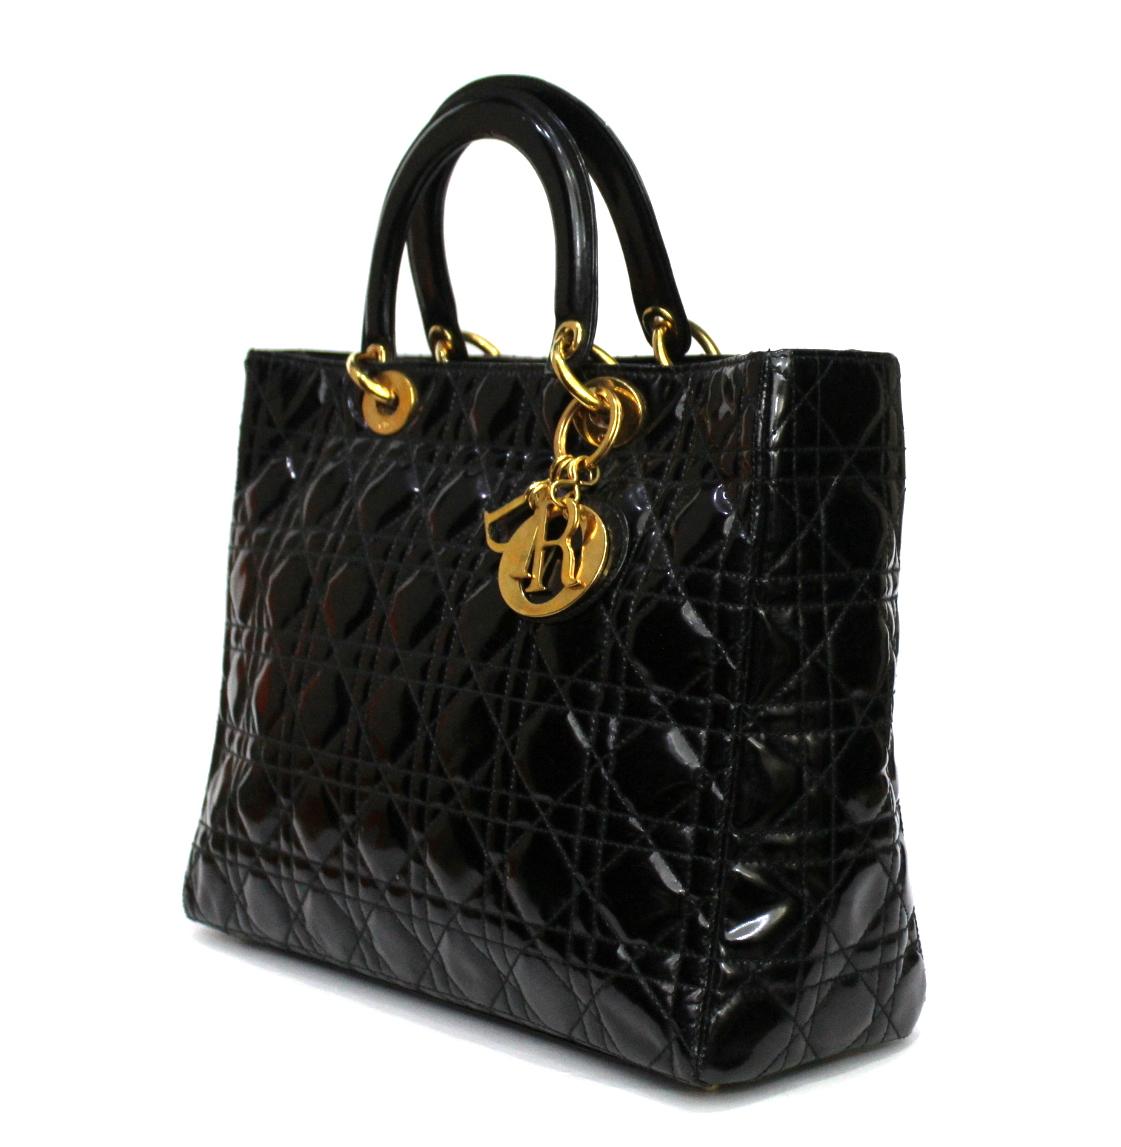 Christian Dior Lady Dior Black Patent Top Handle Bag 2